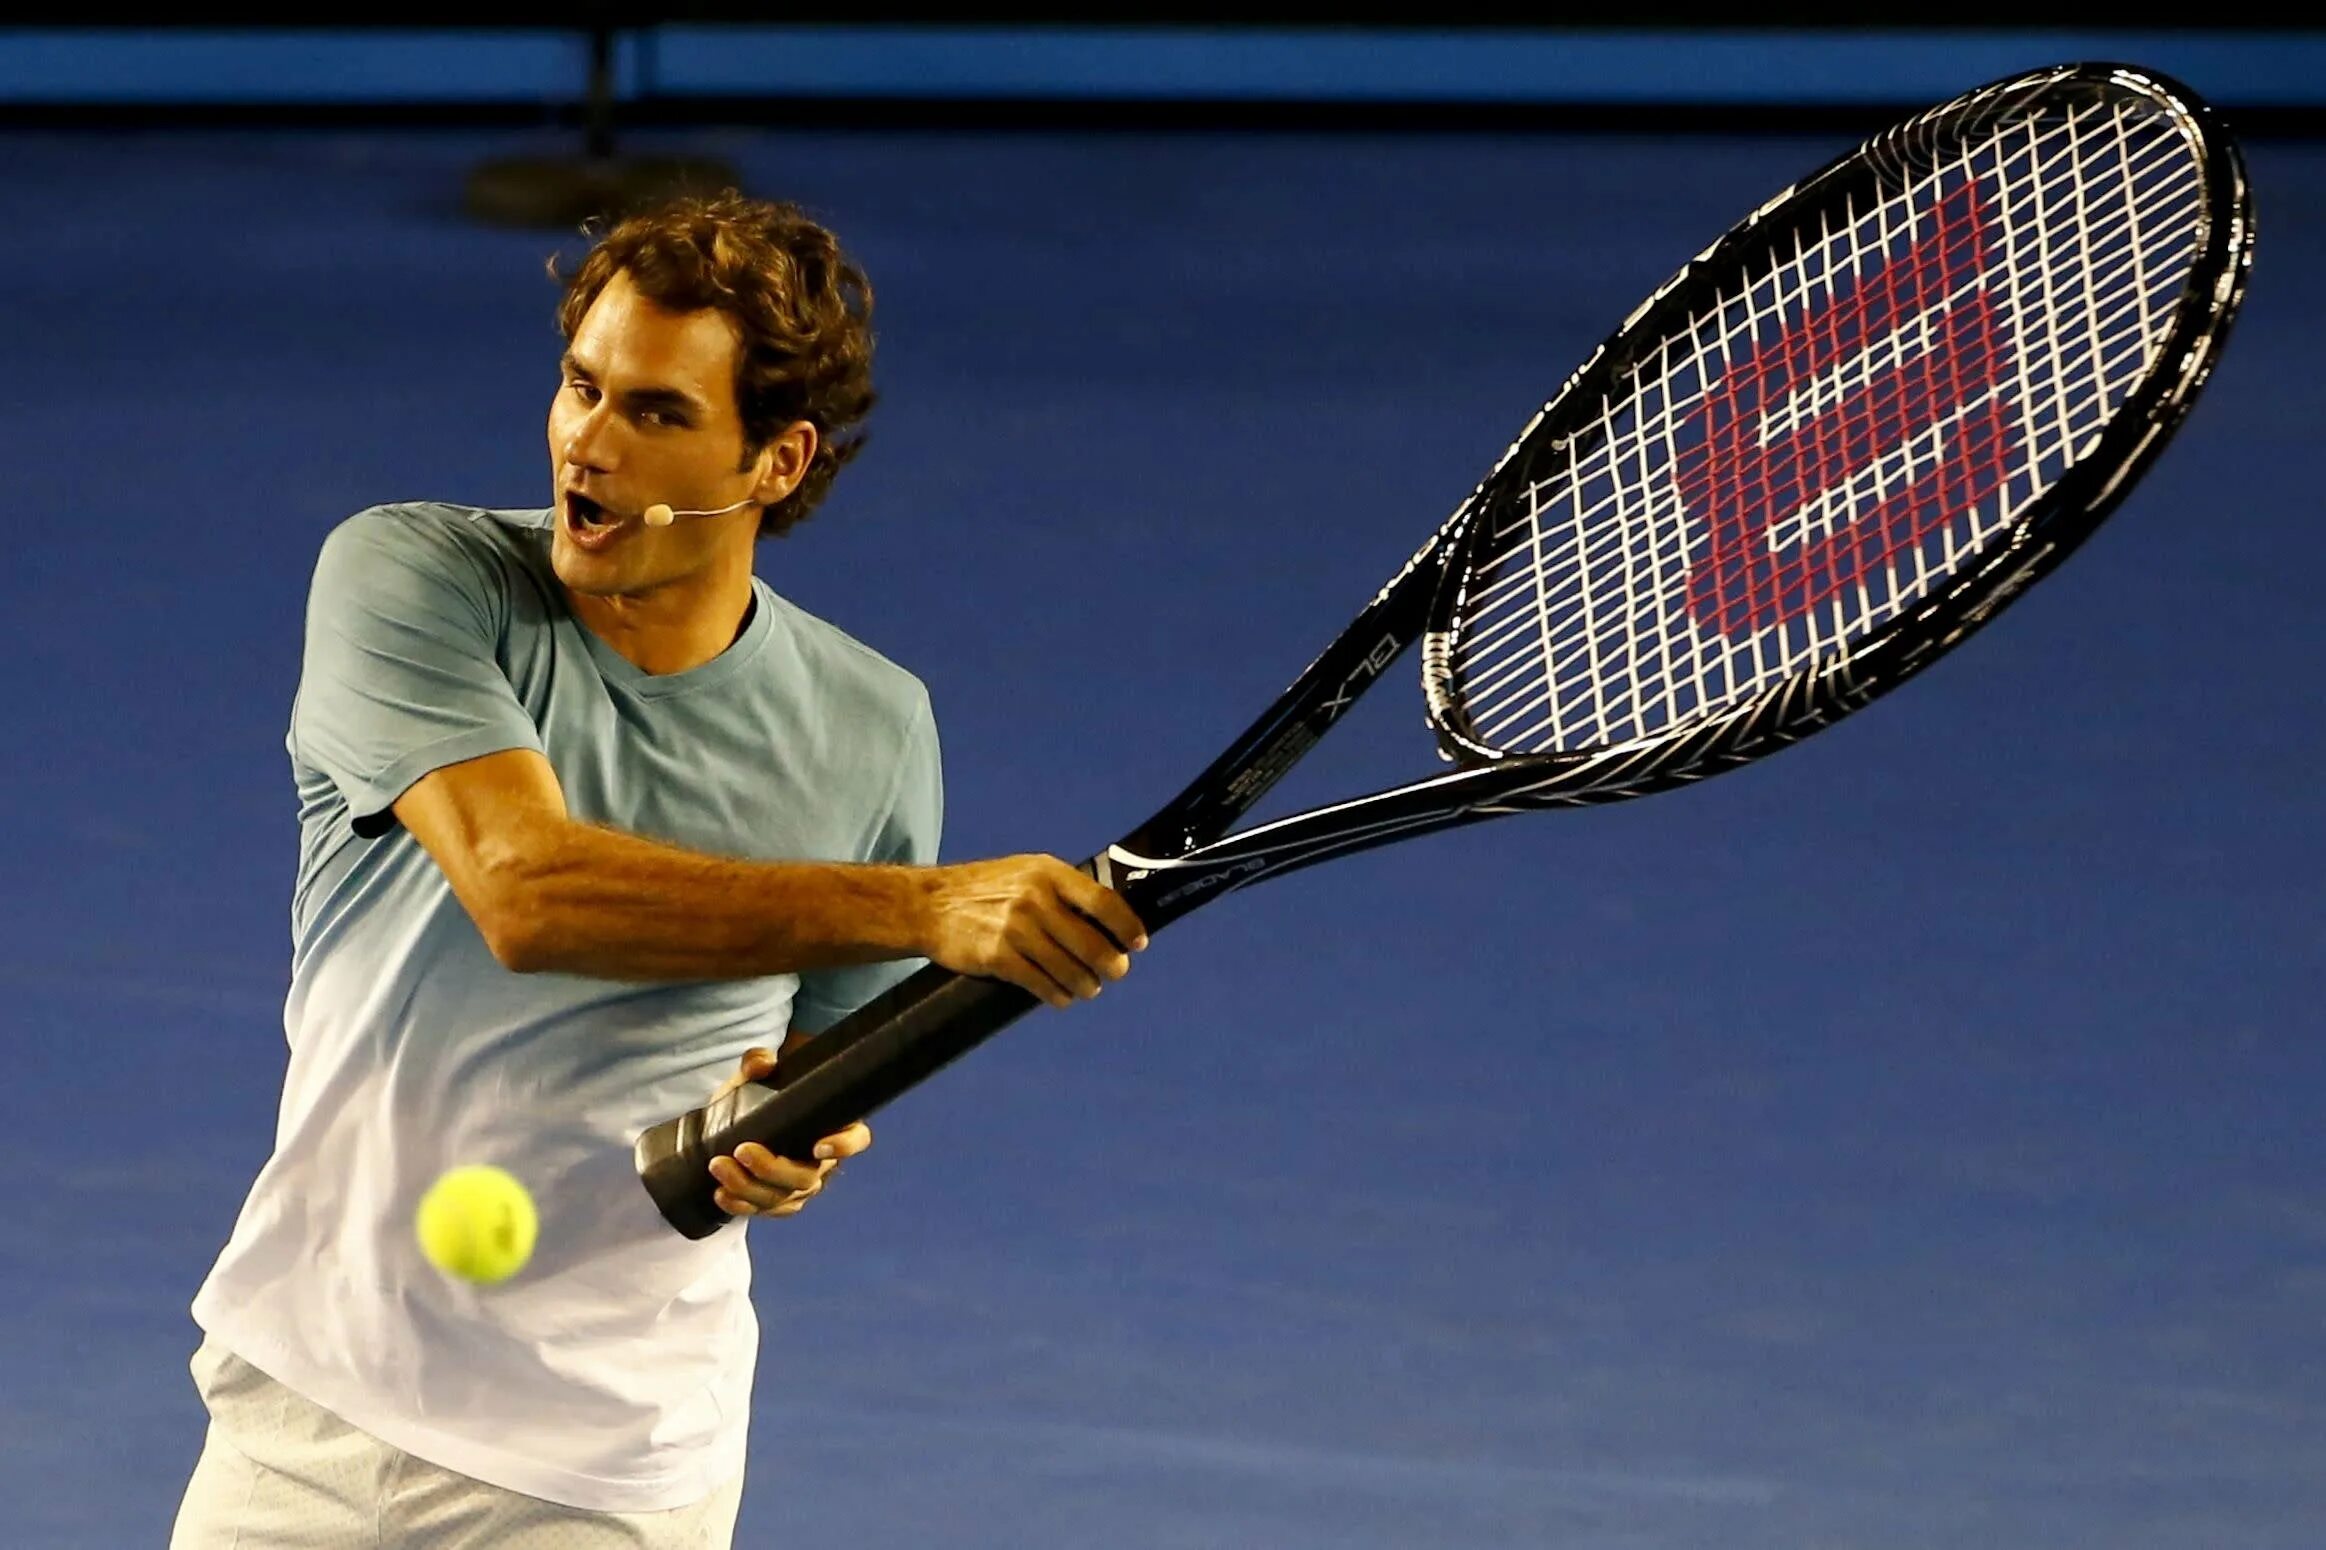 Роджер Федерер с ракеткой. Шелтон теннисист. Гигантские ракетки. Ракетка для большого тенниса. Теннис игра с ракетками